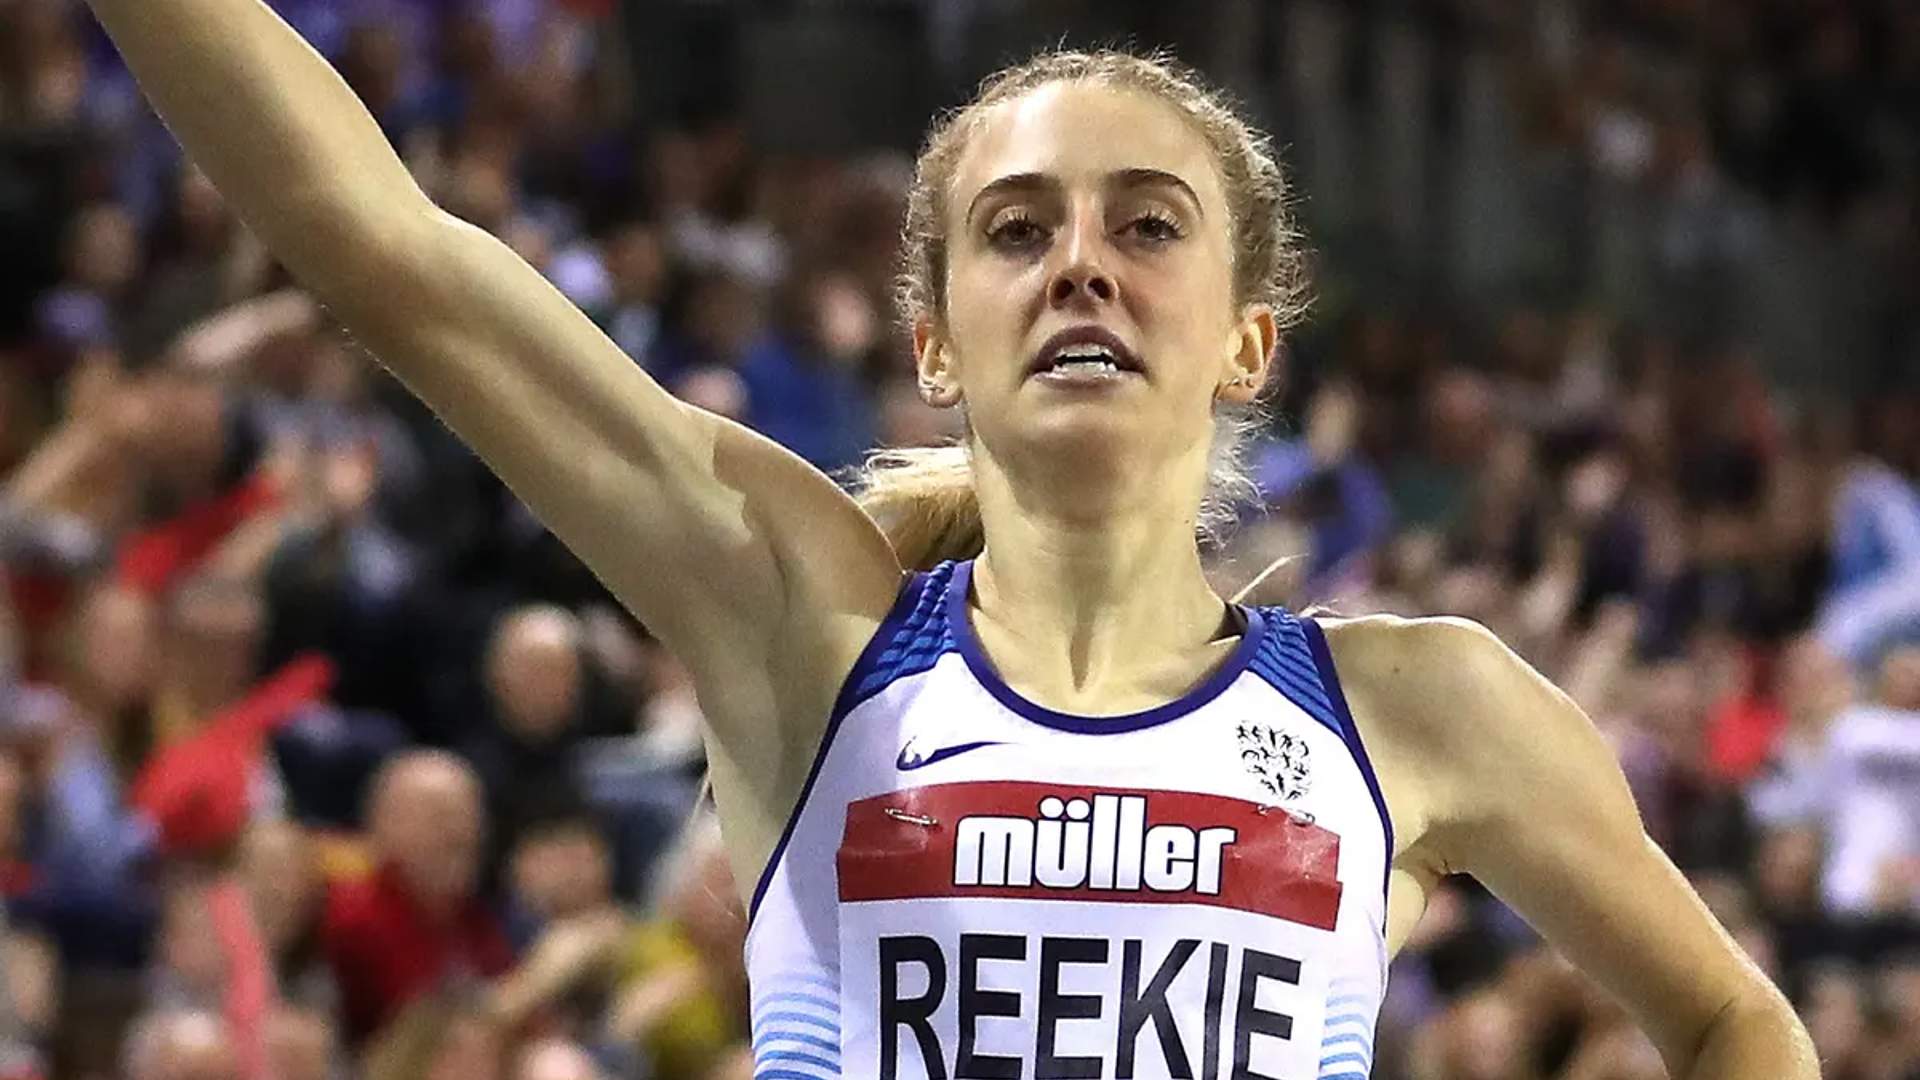 Jemma Reekie after winning at the World Athletics Indoor Tour in Glasgow (Image Credits - Scottish Athletics)